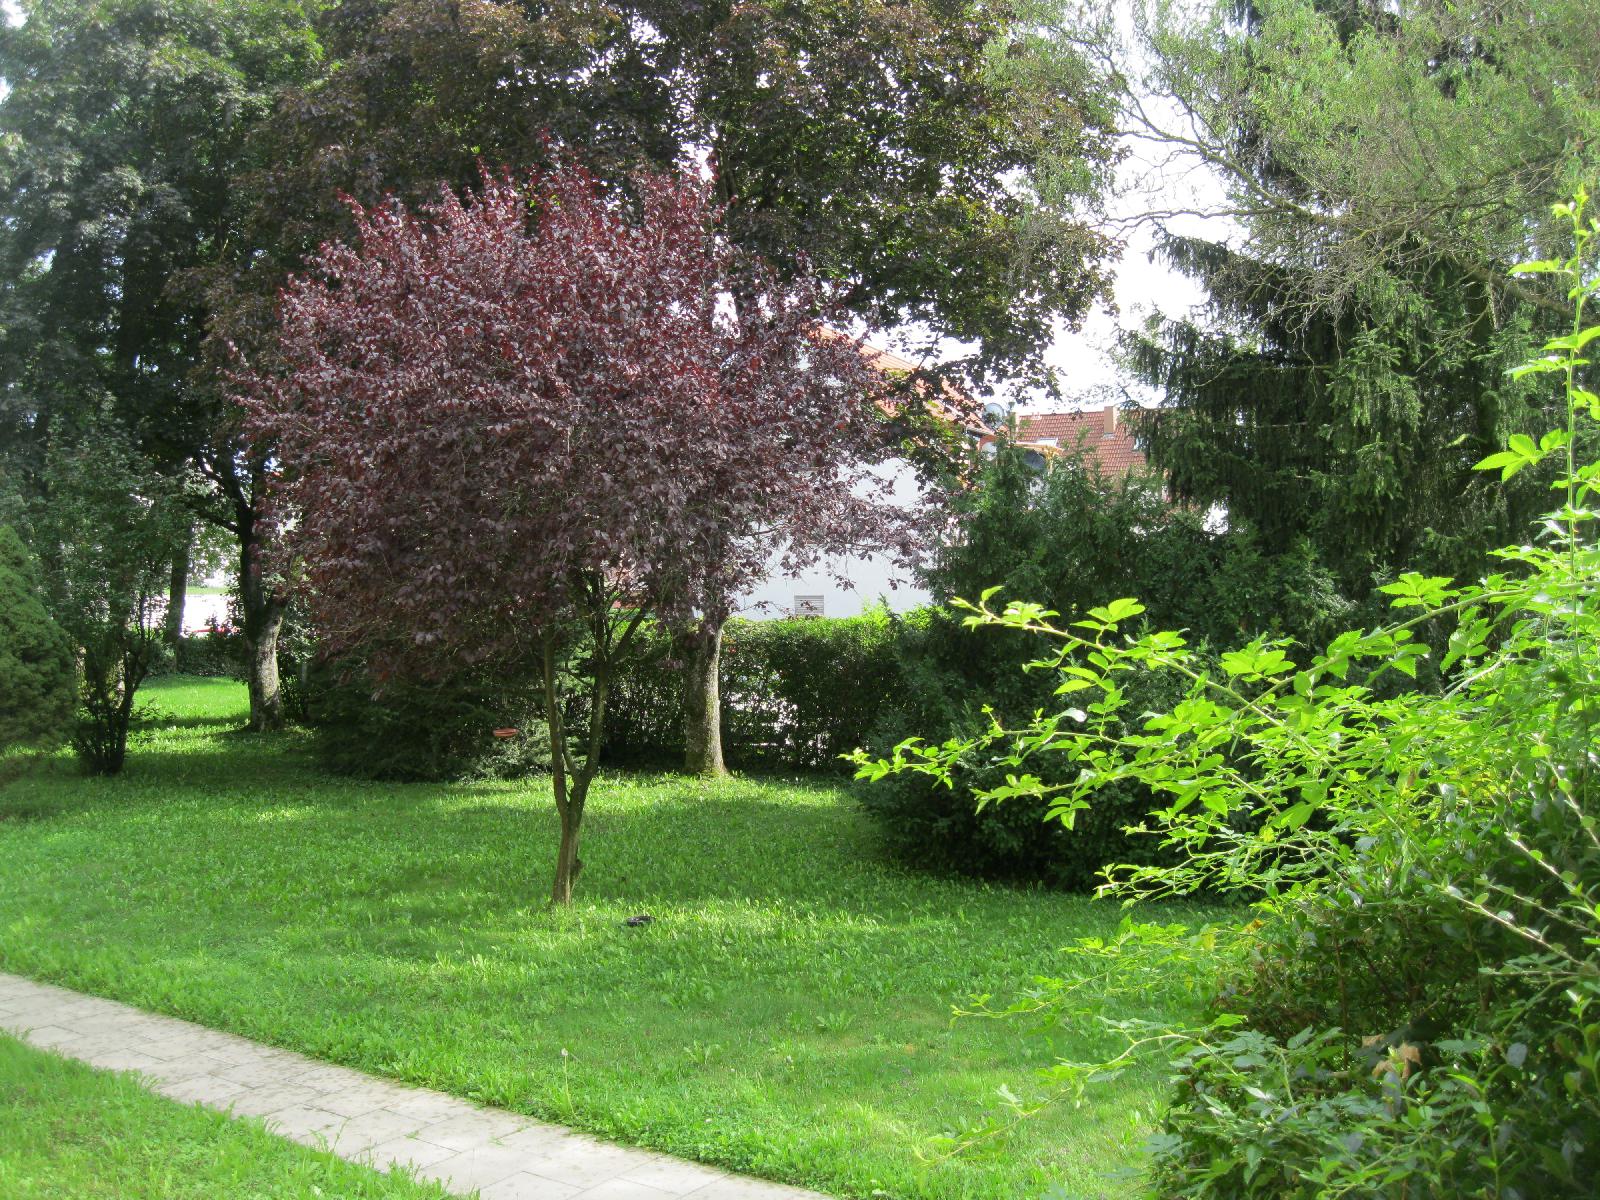 Foliage in Chris' courtyard